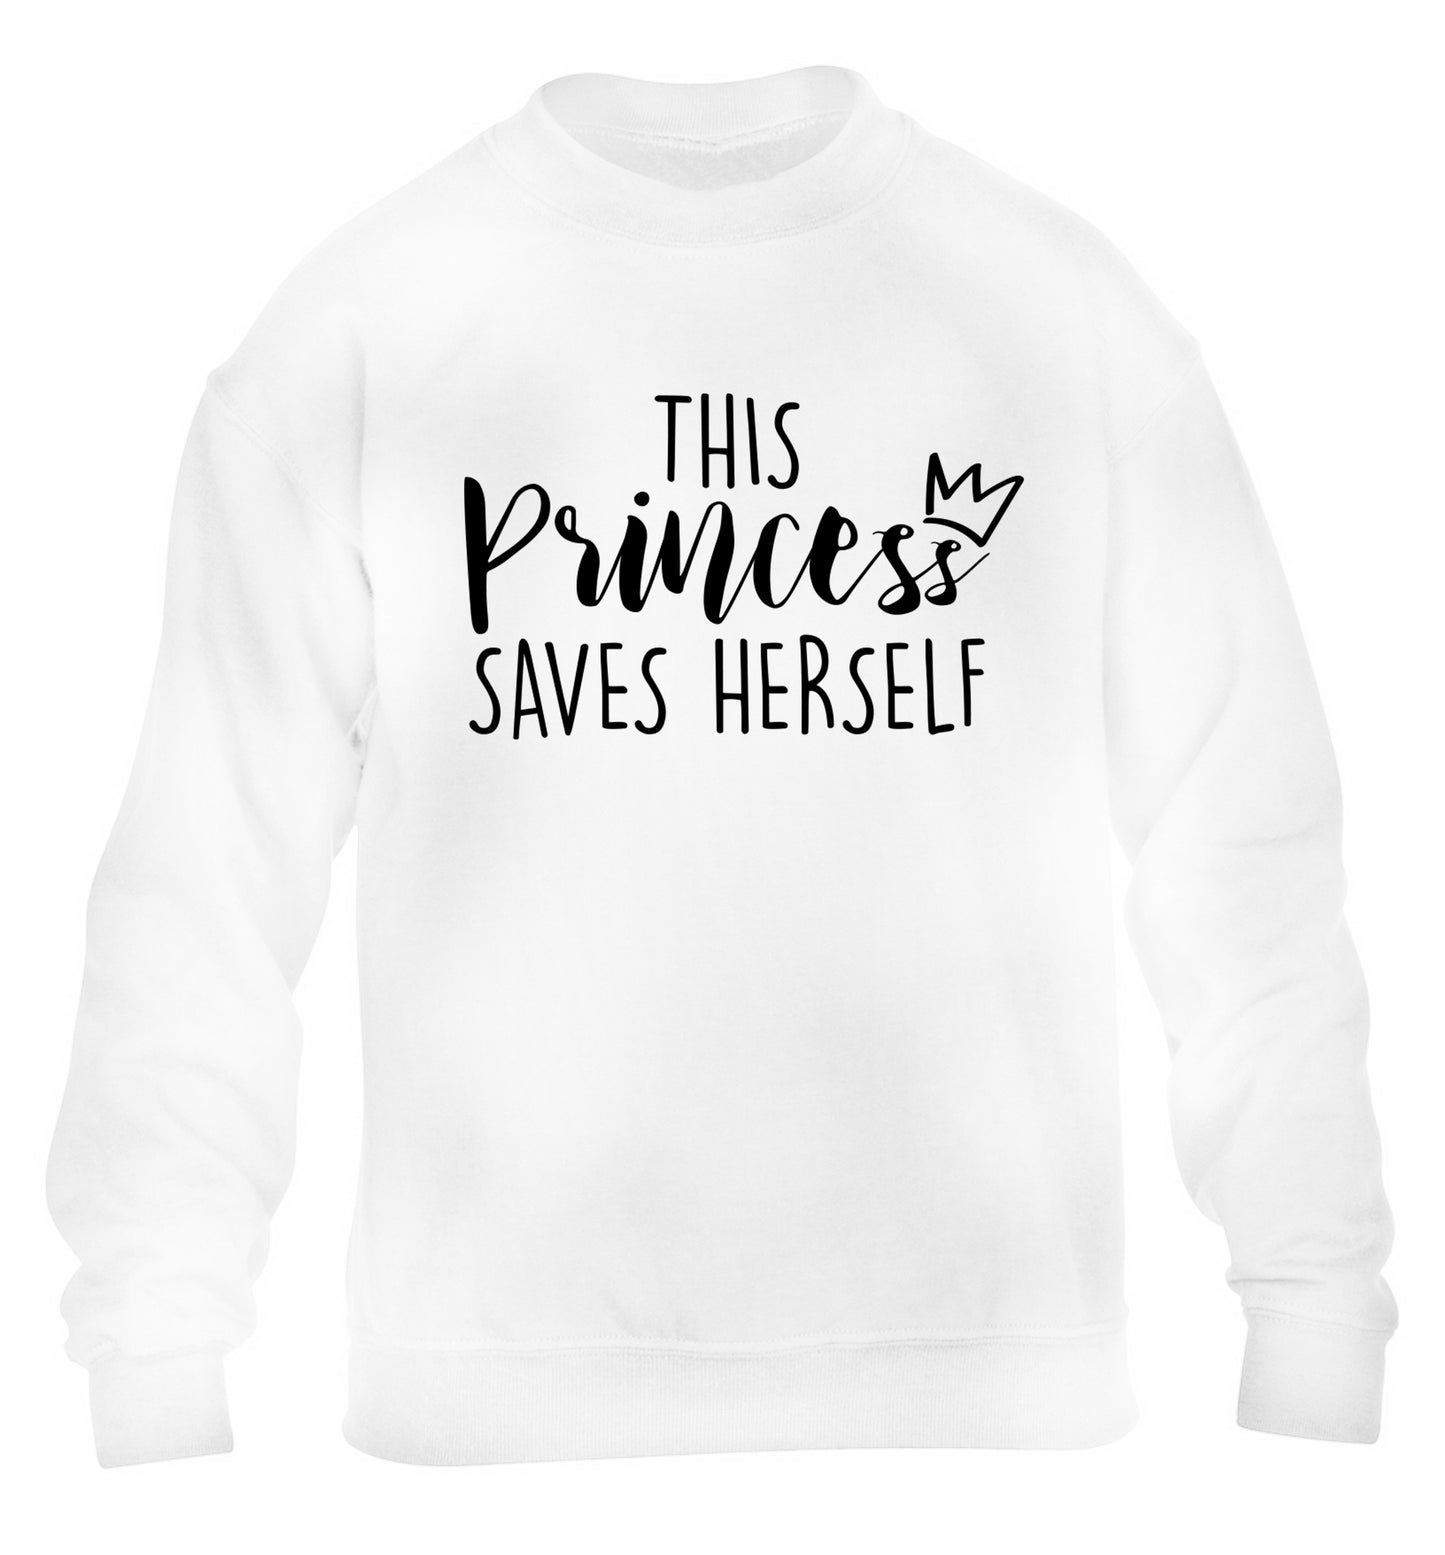 This princess saves herself children's white sweater 12-14 Years